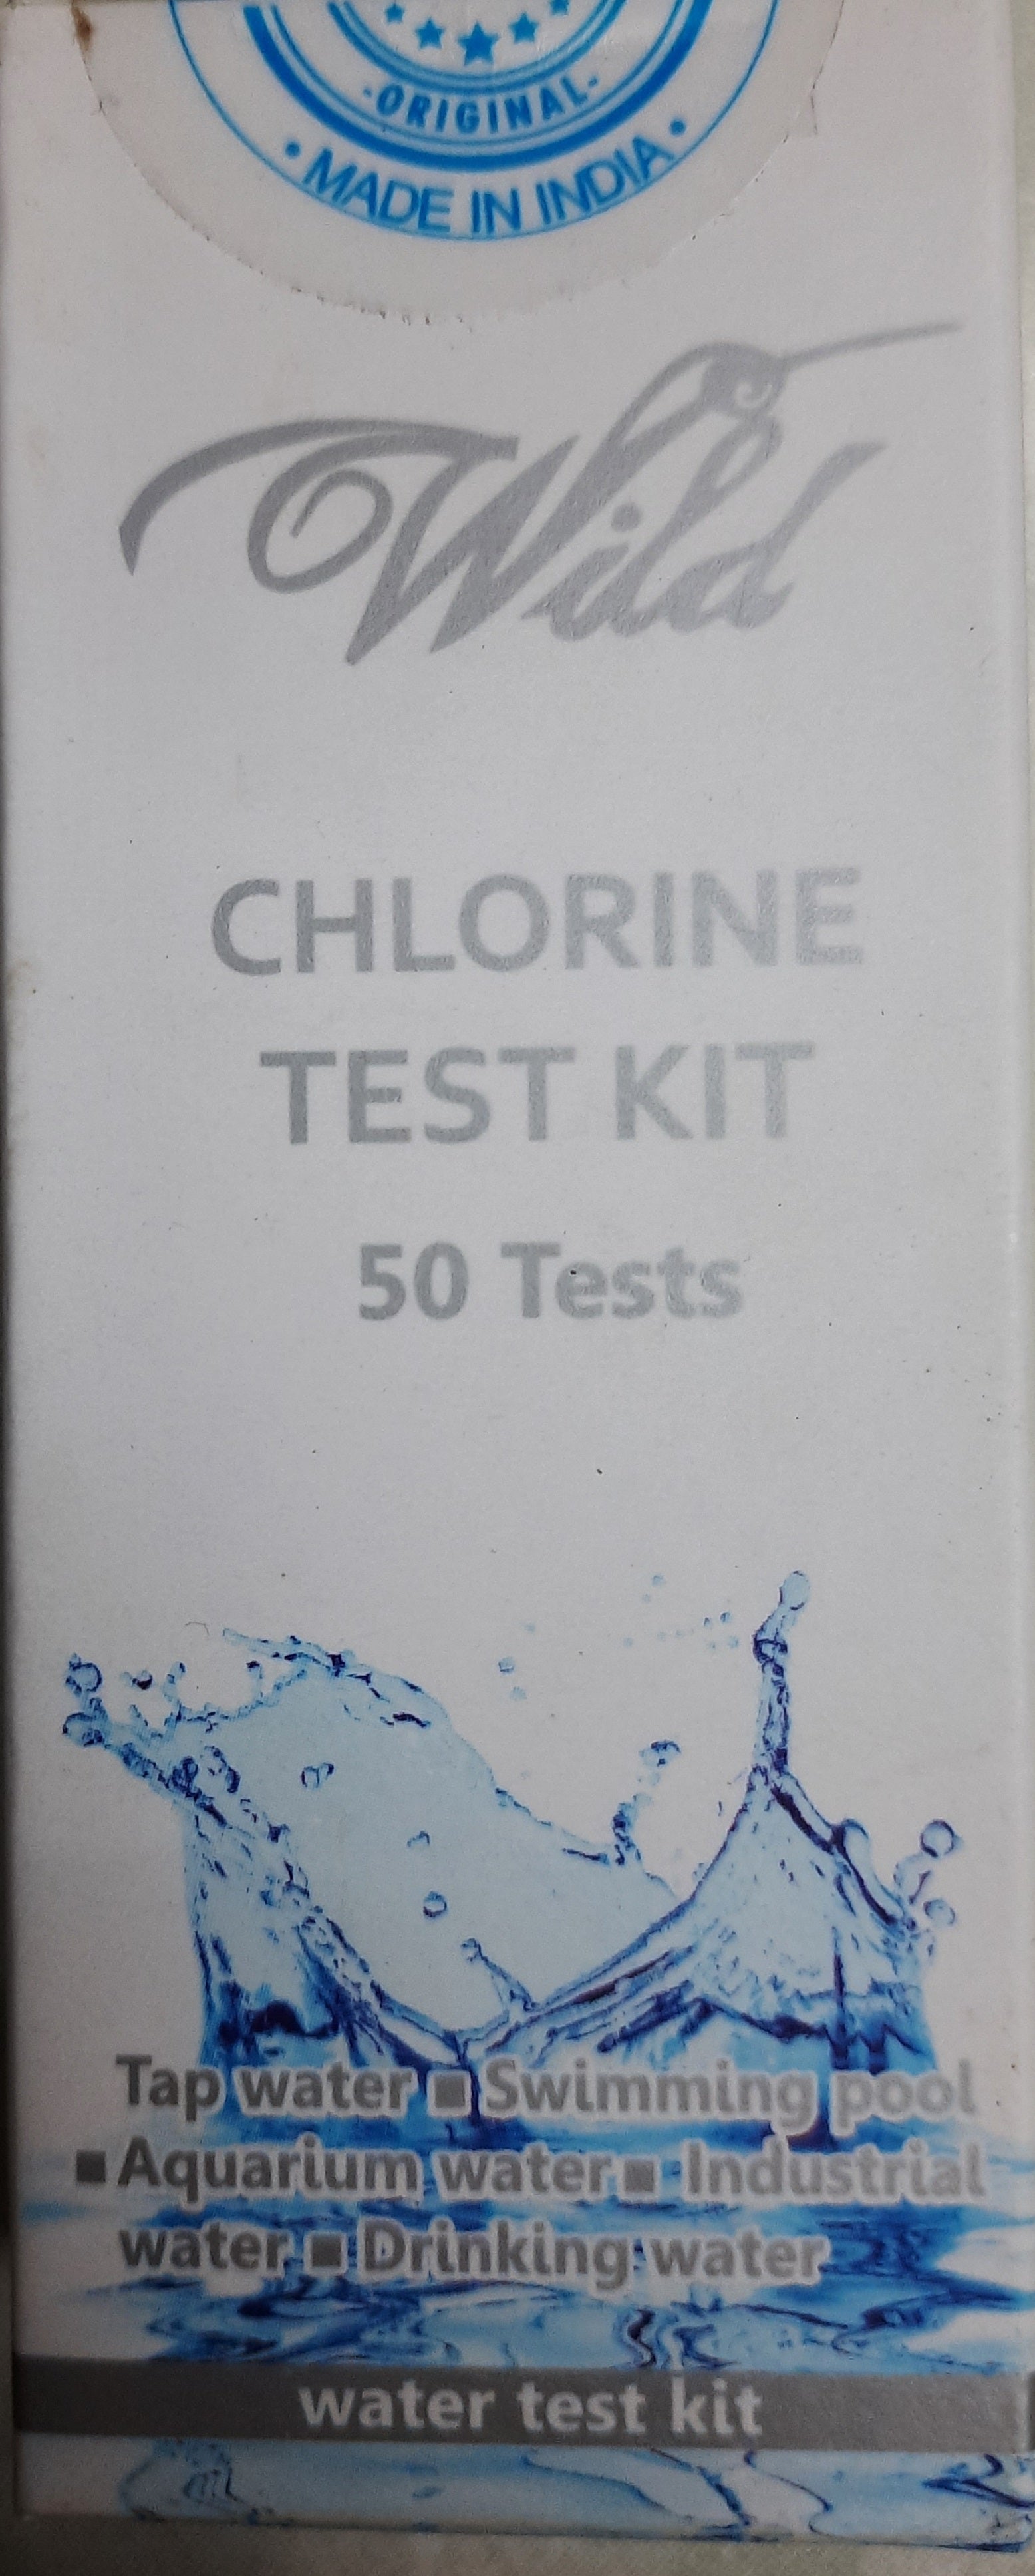 Wild Chlorine Test Kit (50 Tests) - Aquatic Remedies Product